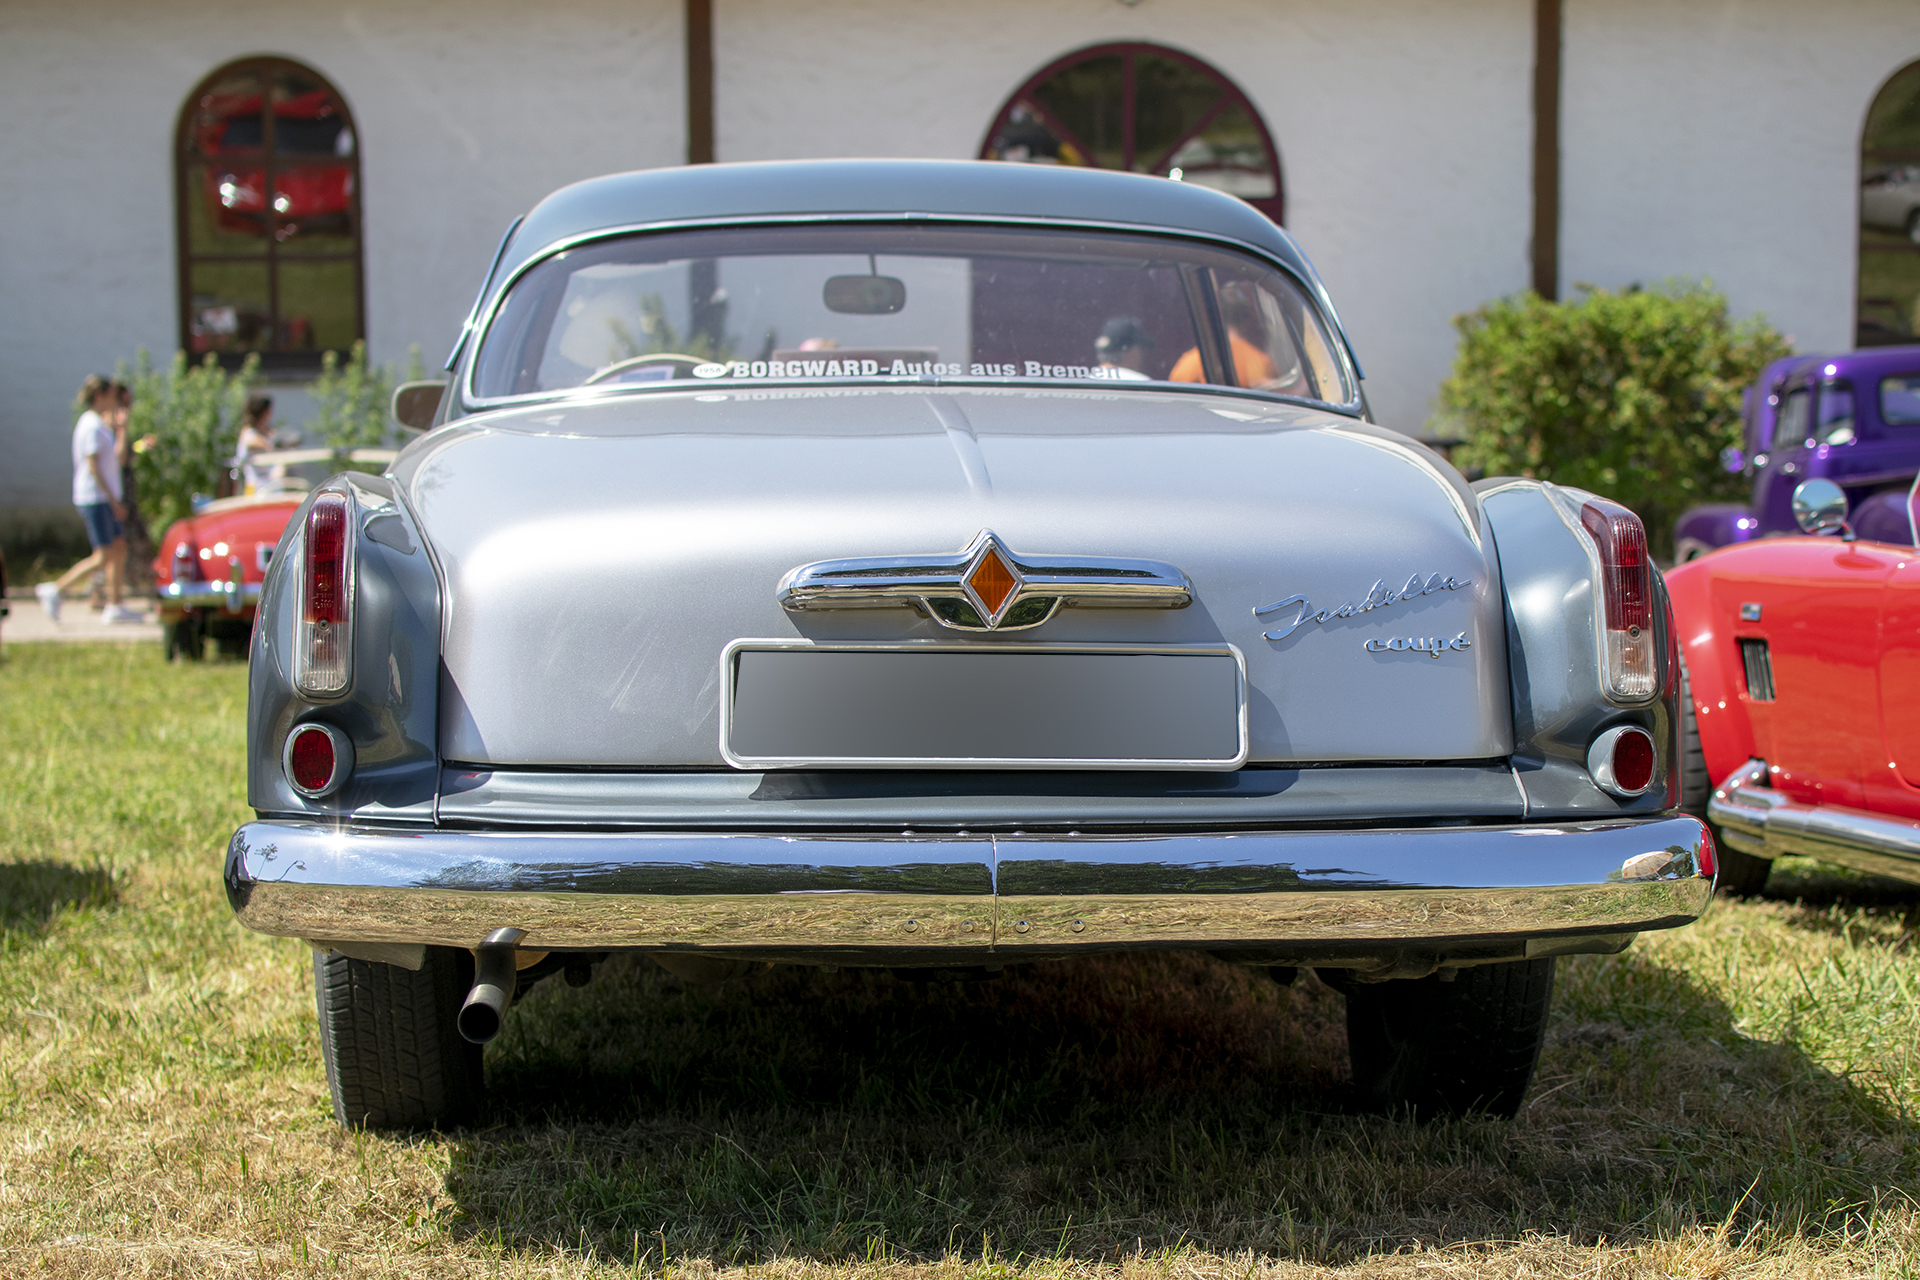 Borgward Isabella coupé 1958 back - Automania 2019, Edling les Anzeling, Hara du Moulin 